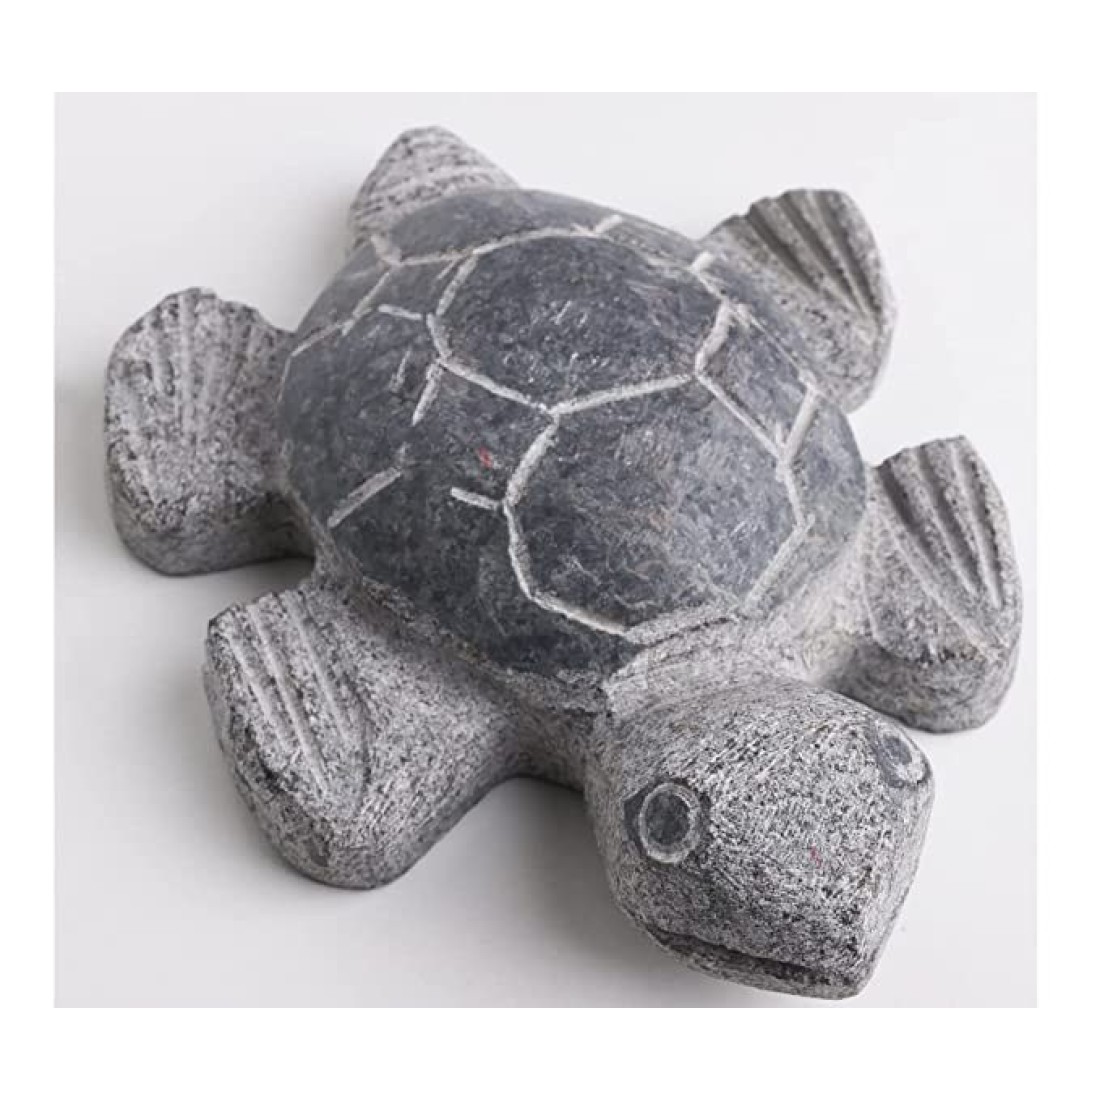 Tillage-Natural Stone Carved Tortoise for Vastu/Feng Shui/Pooja and for Home Decor (Size 20cmx15cm) 1